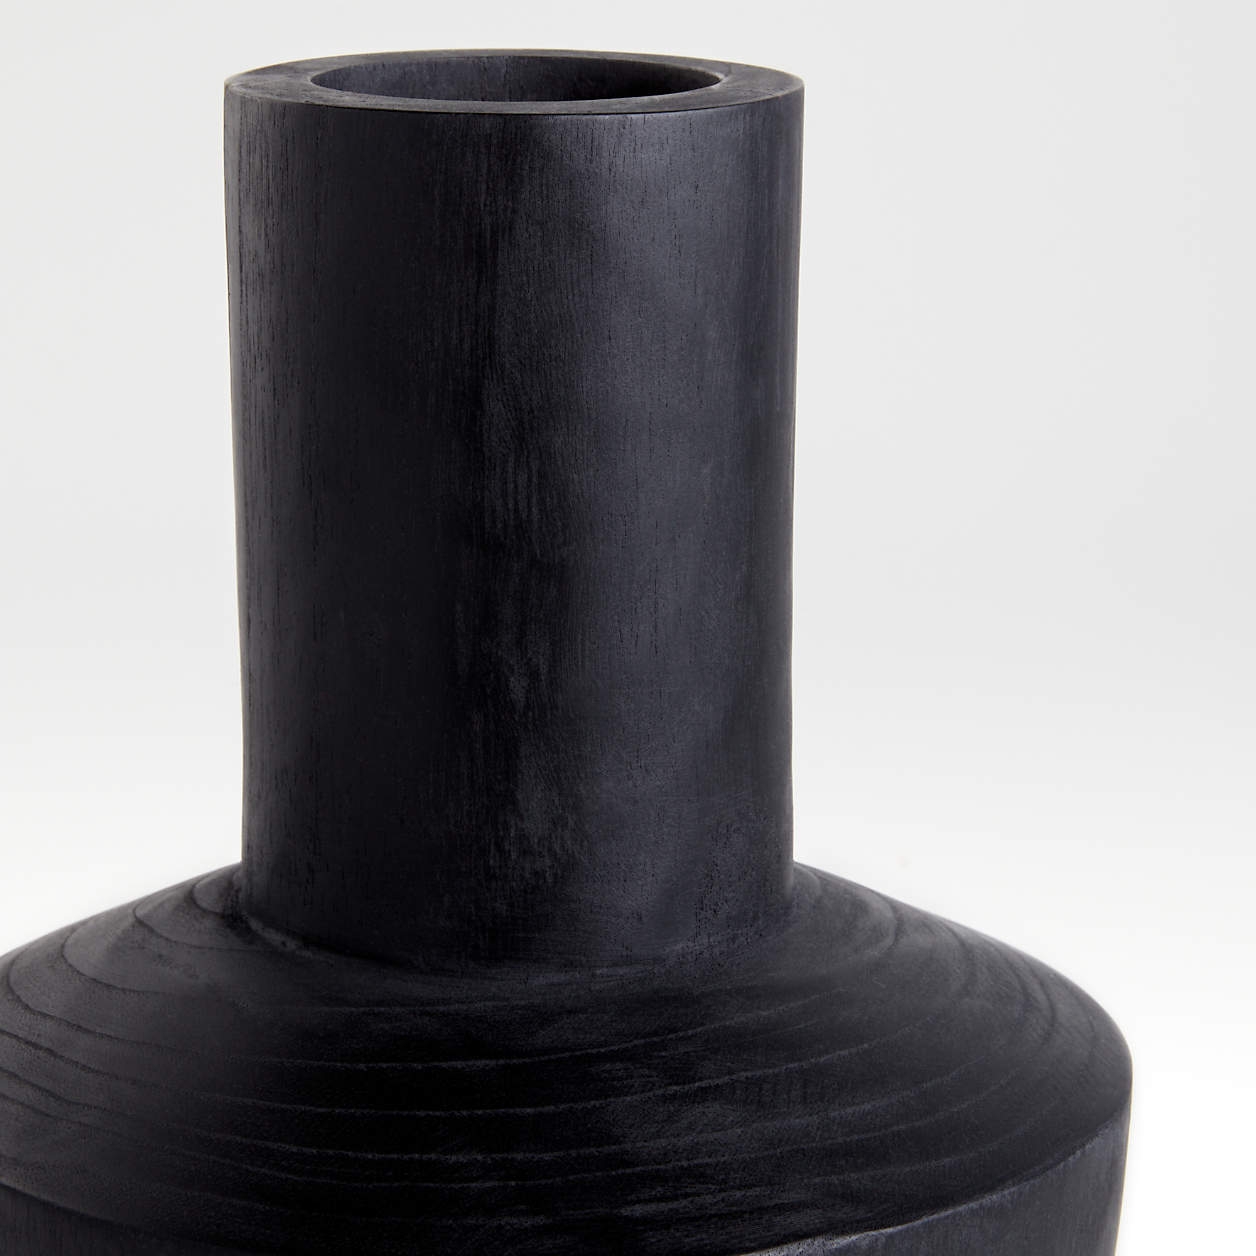 Arllon Wood Vase, Black, Large - Image 2